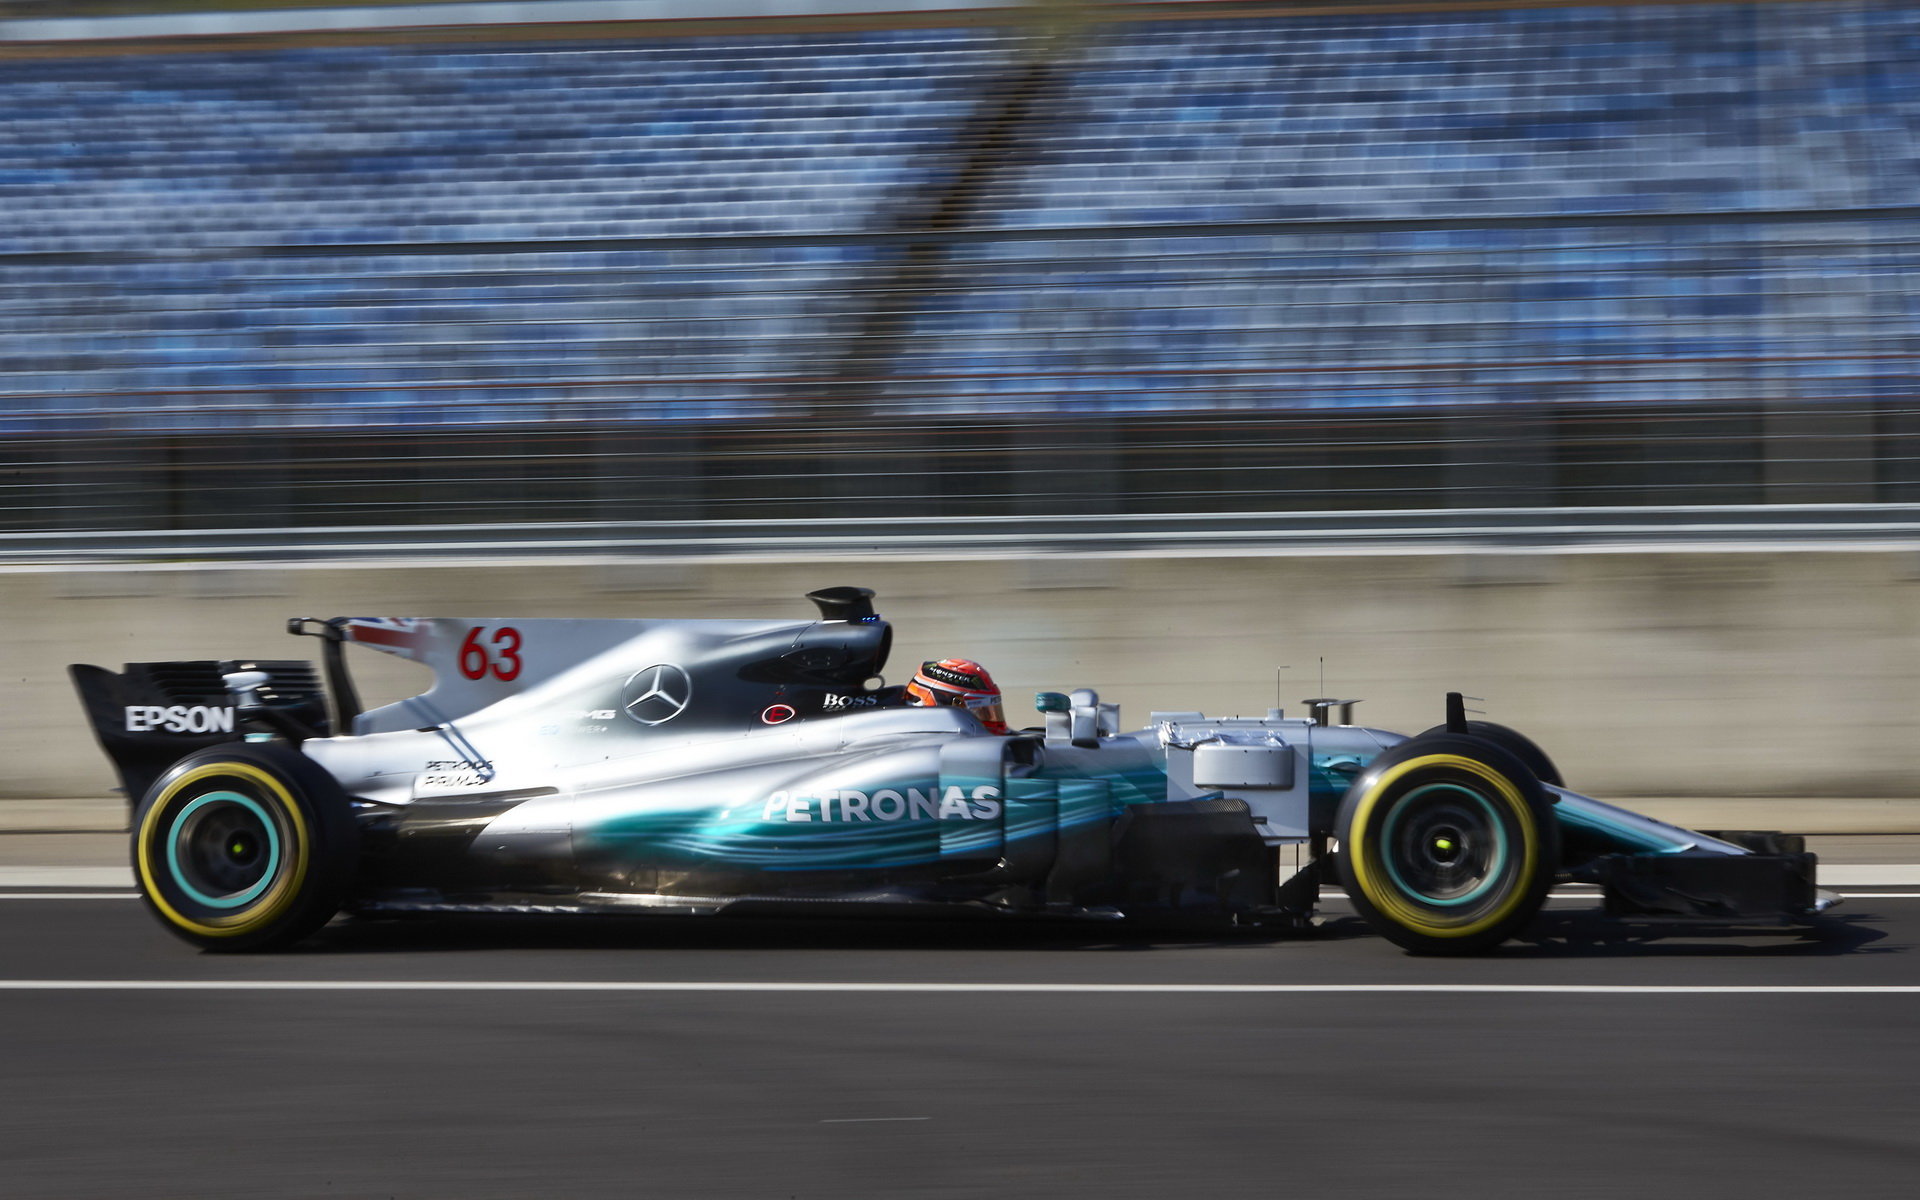 George Russell testuje první den vůz Mercedes F1 W08 EQ Power+ v Maďarsku